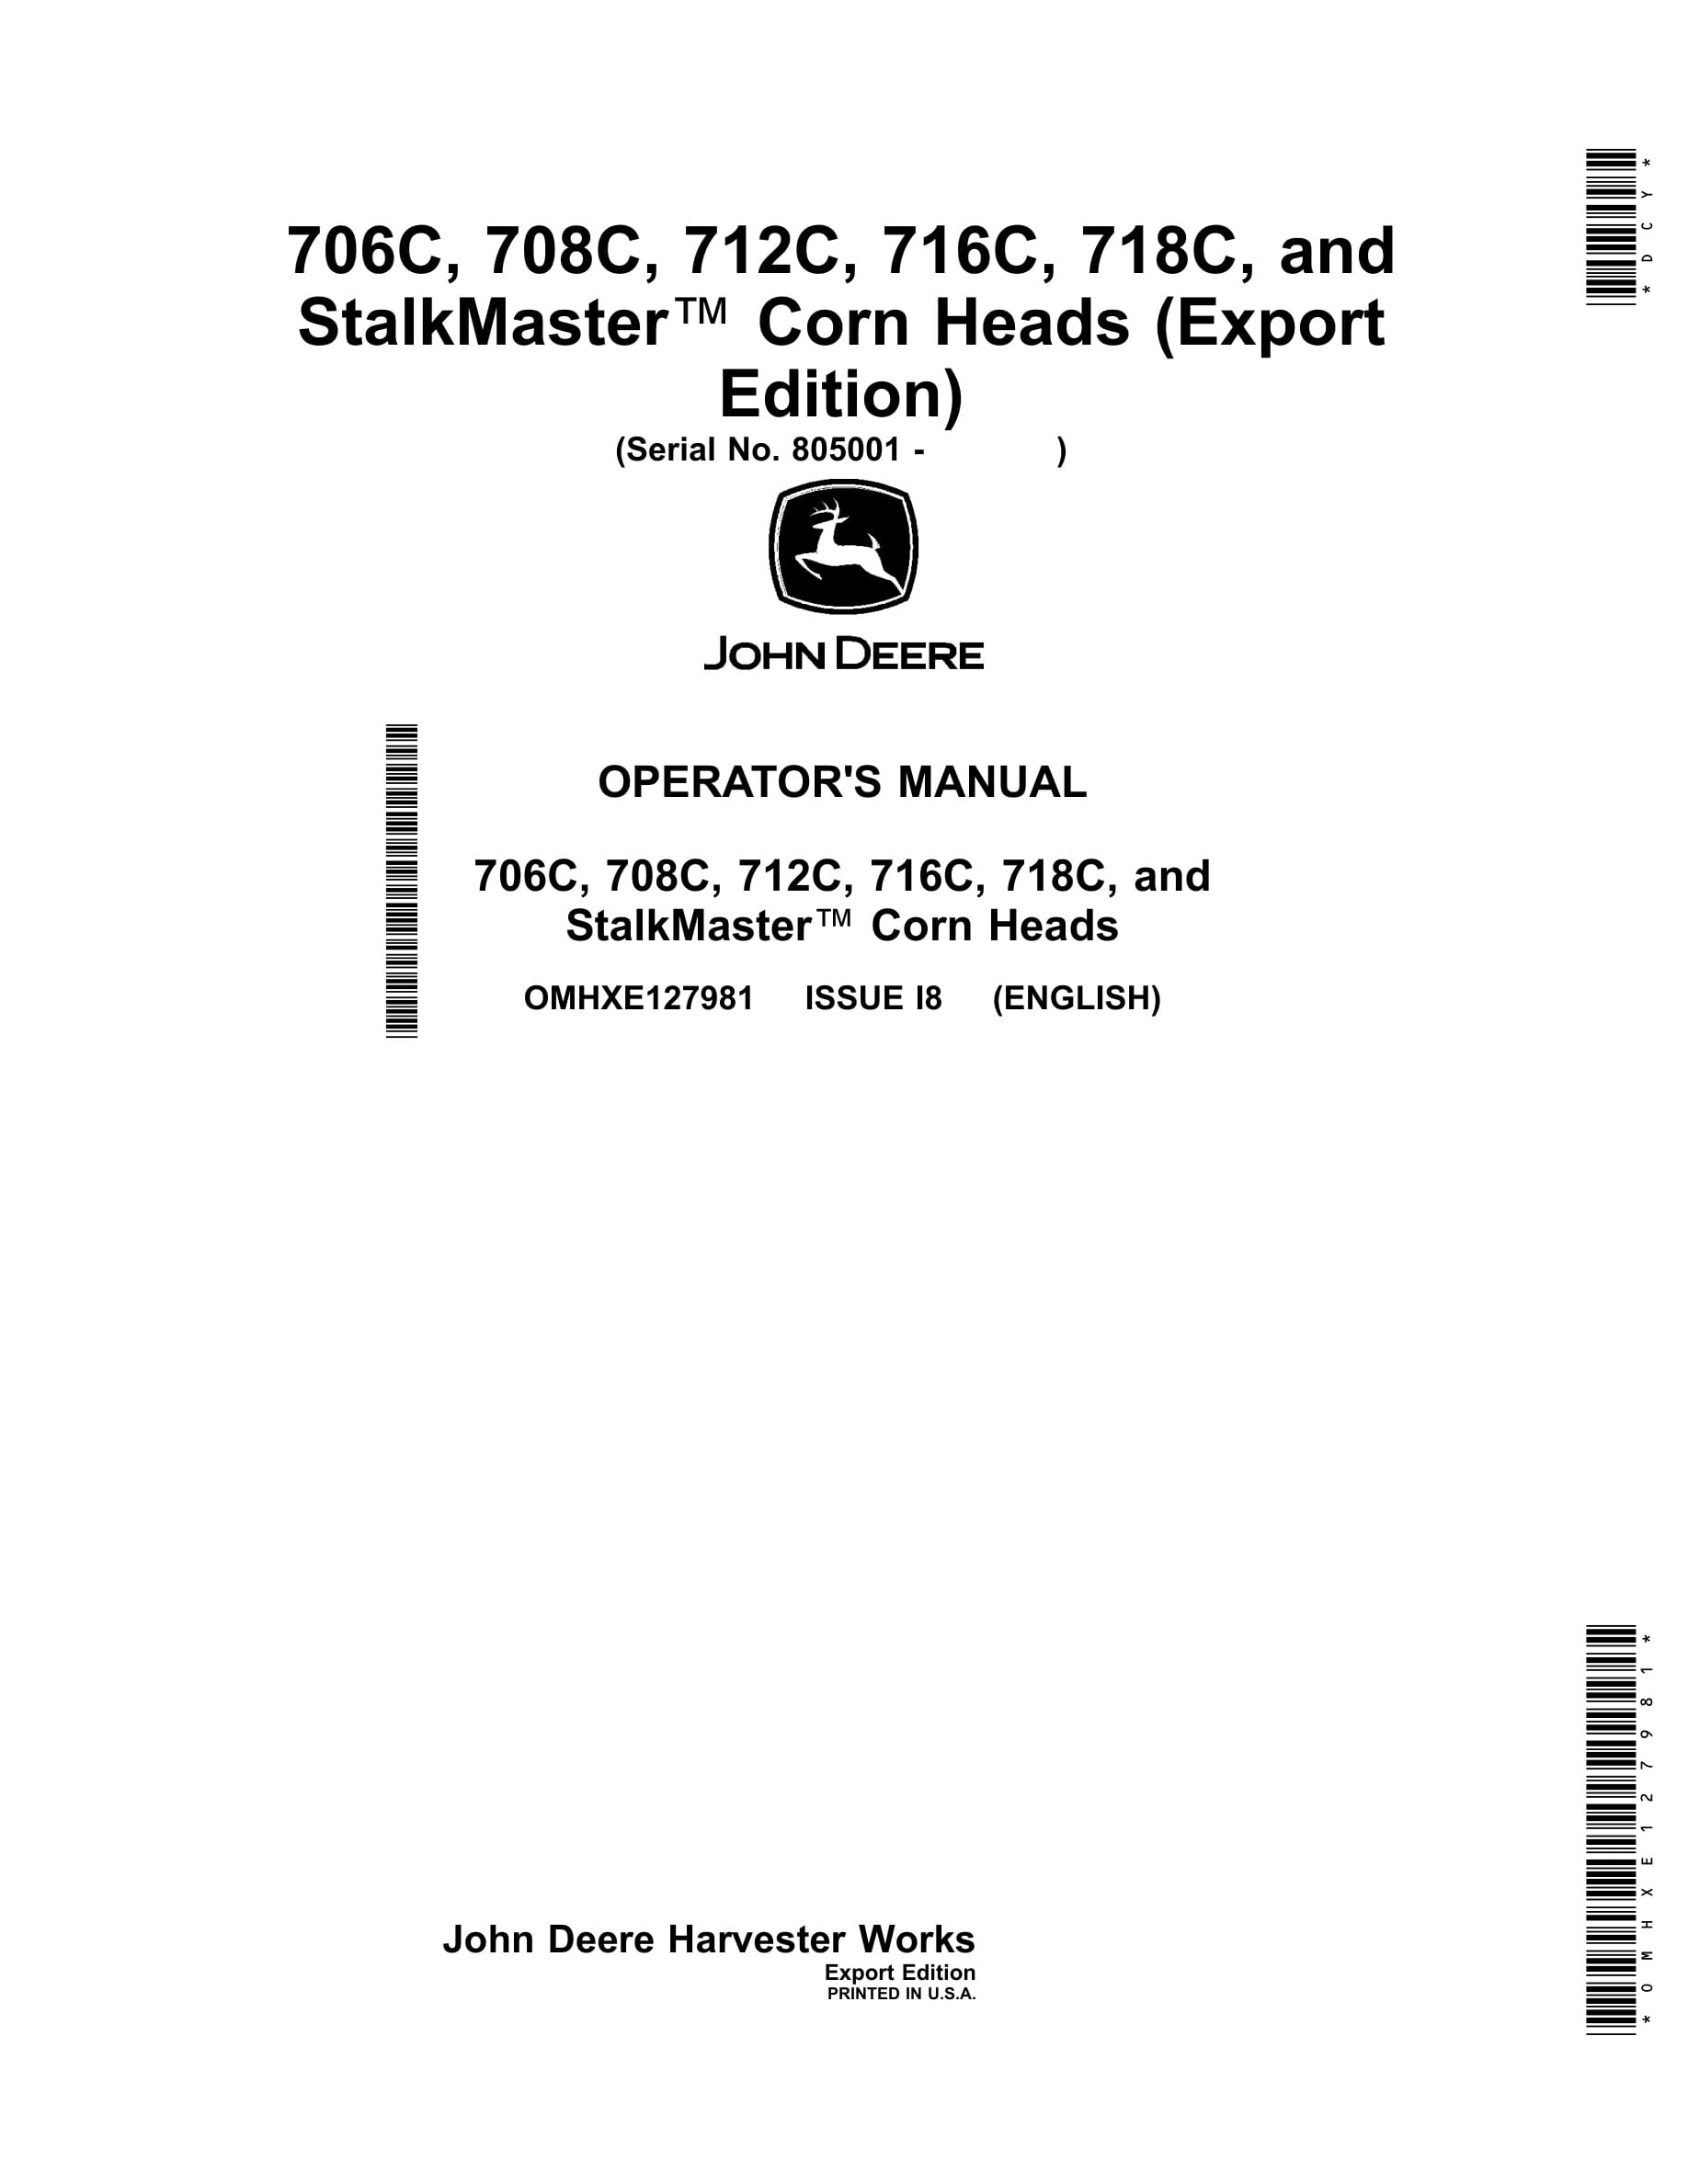 John Deere 706C, 708C, 712C, 716C, 718C, and StalkMaster Corn Heads Operator Manual OMHXE127981-1